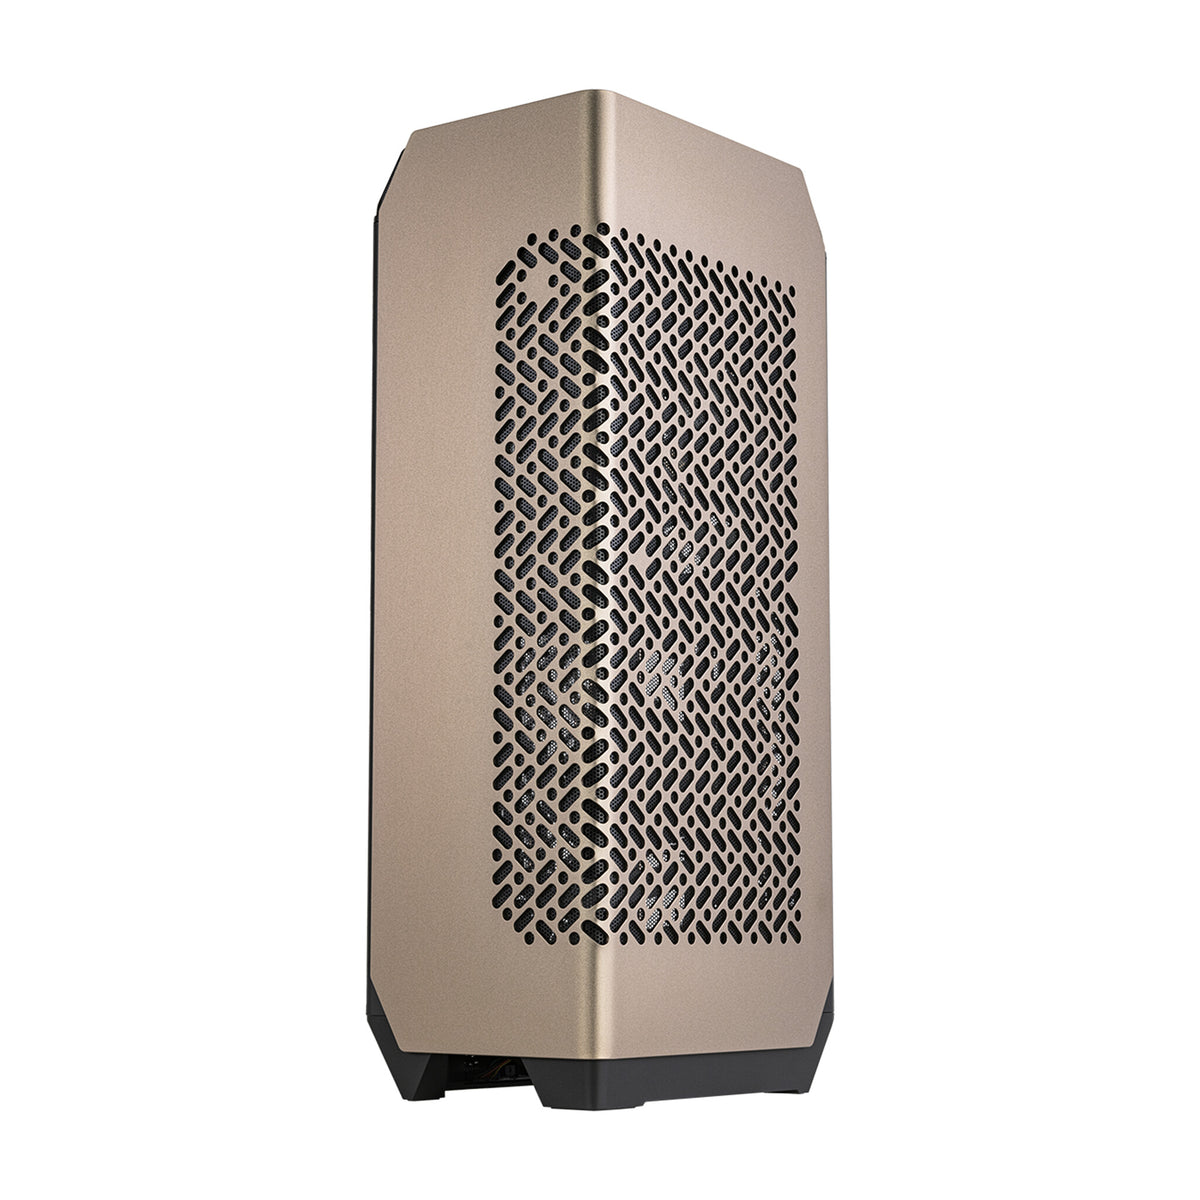 Cooler Master NCORE 100 MAX - ITX SFF Tower Case in Bronze w/ 850W SFX Gold PSU